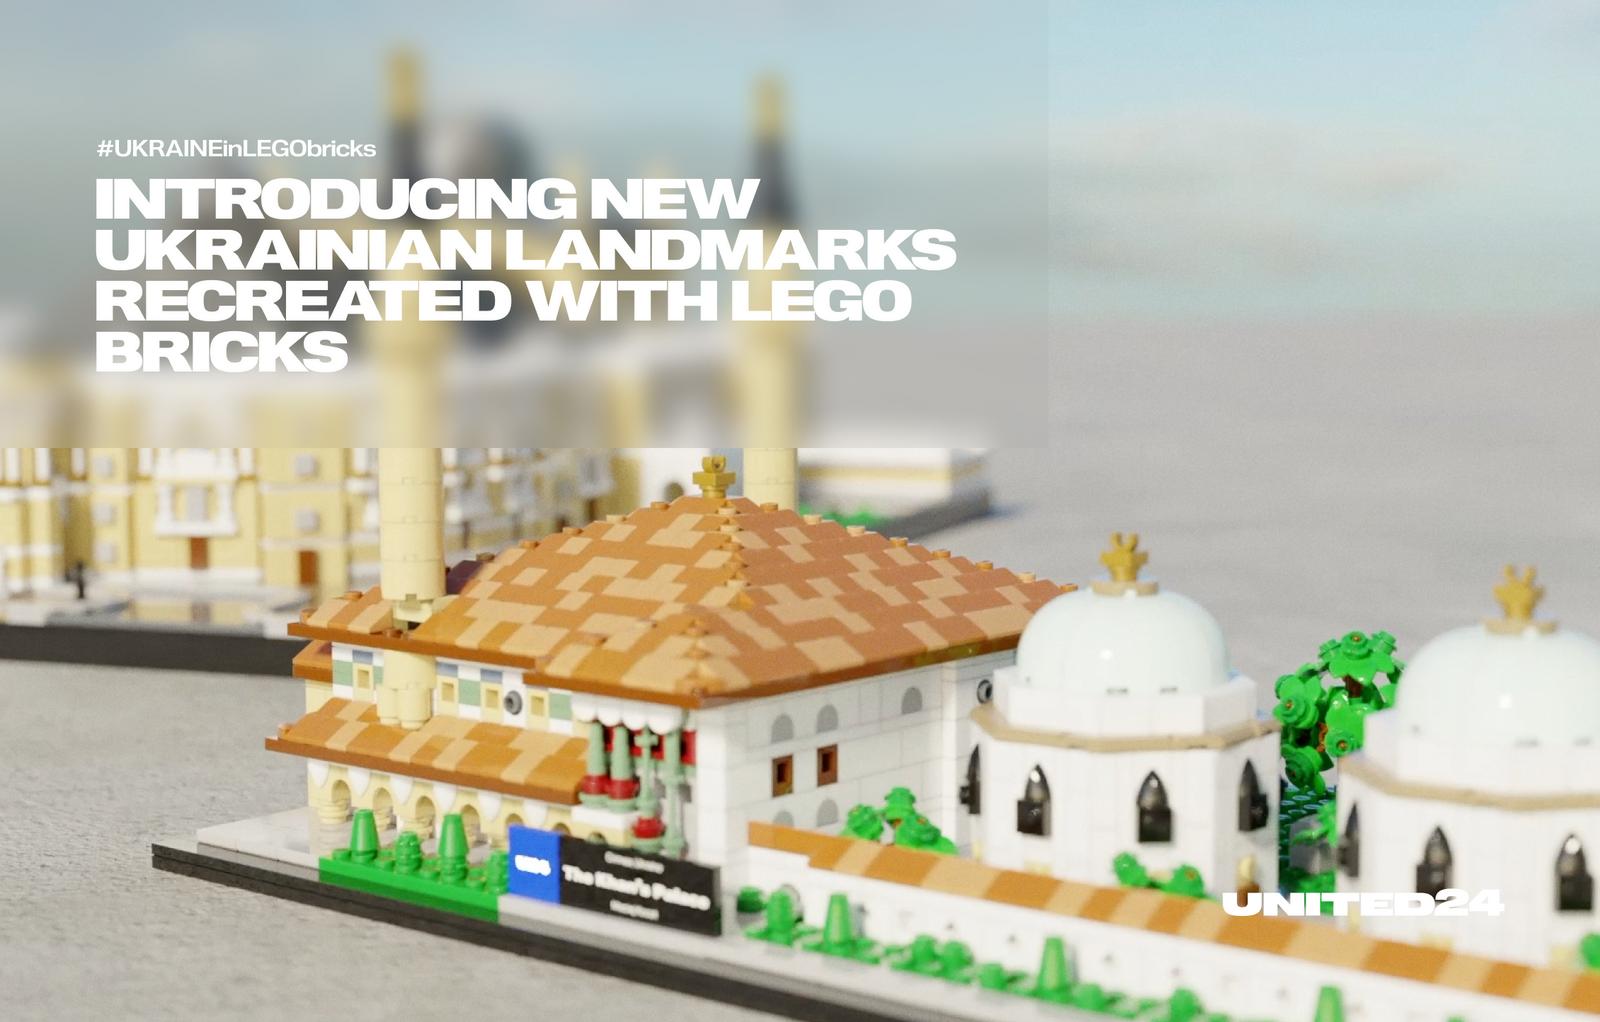 Introducing new Ukrainian landmarks recreated with LEGO bricks!